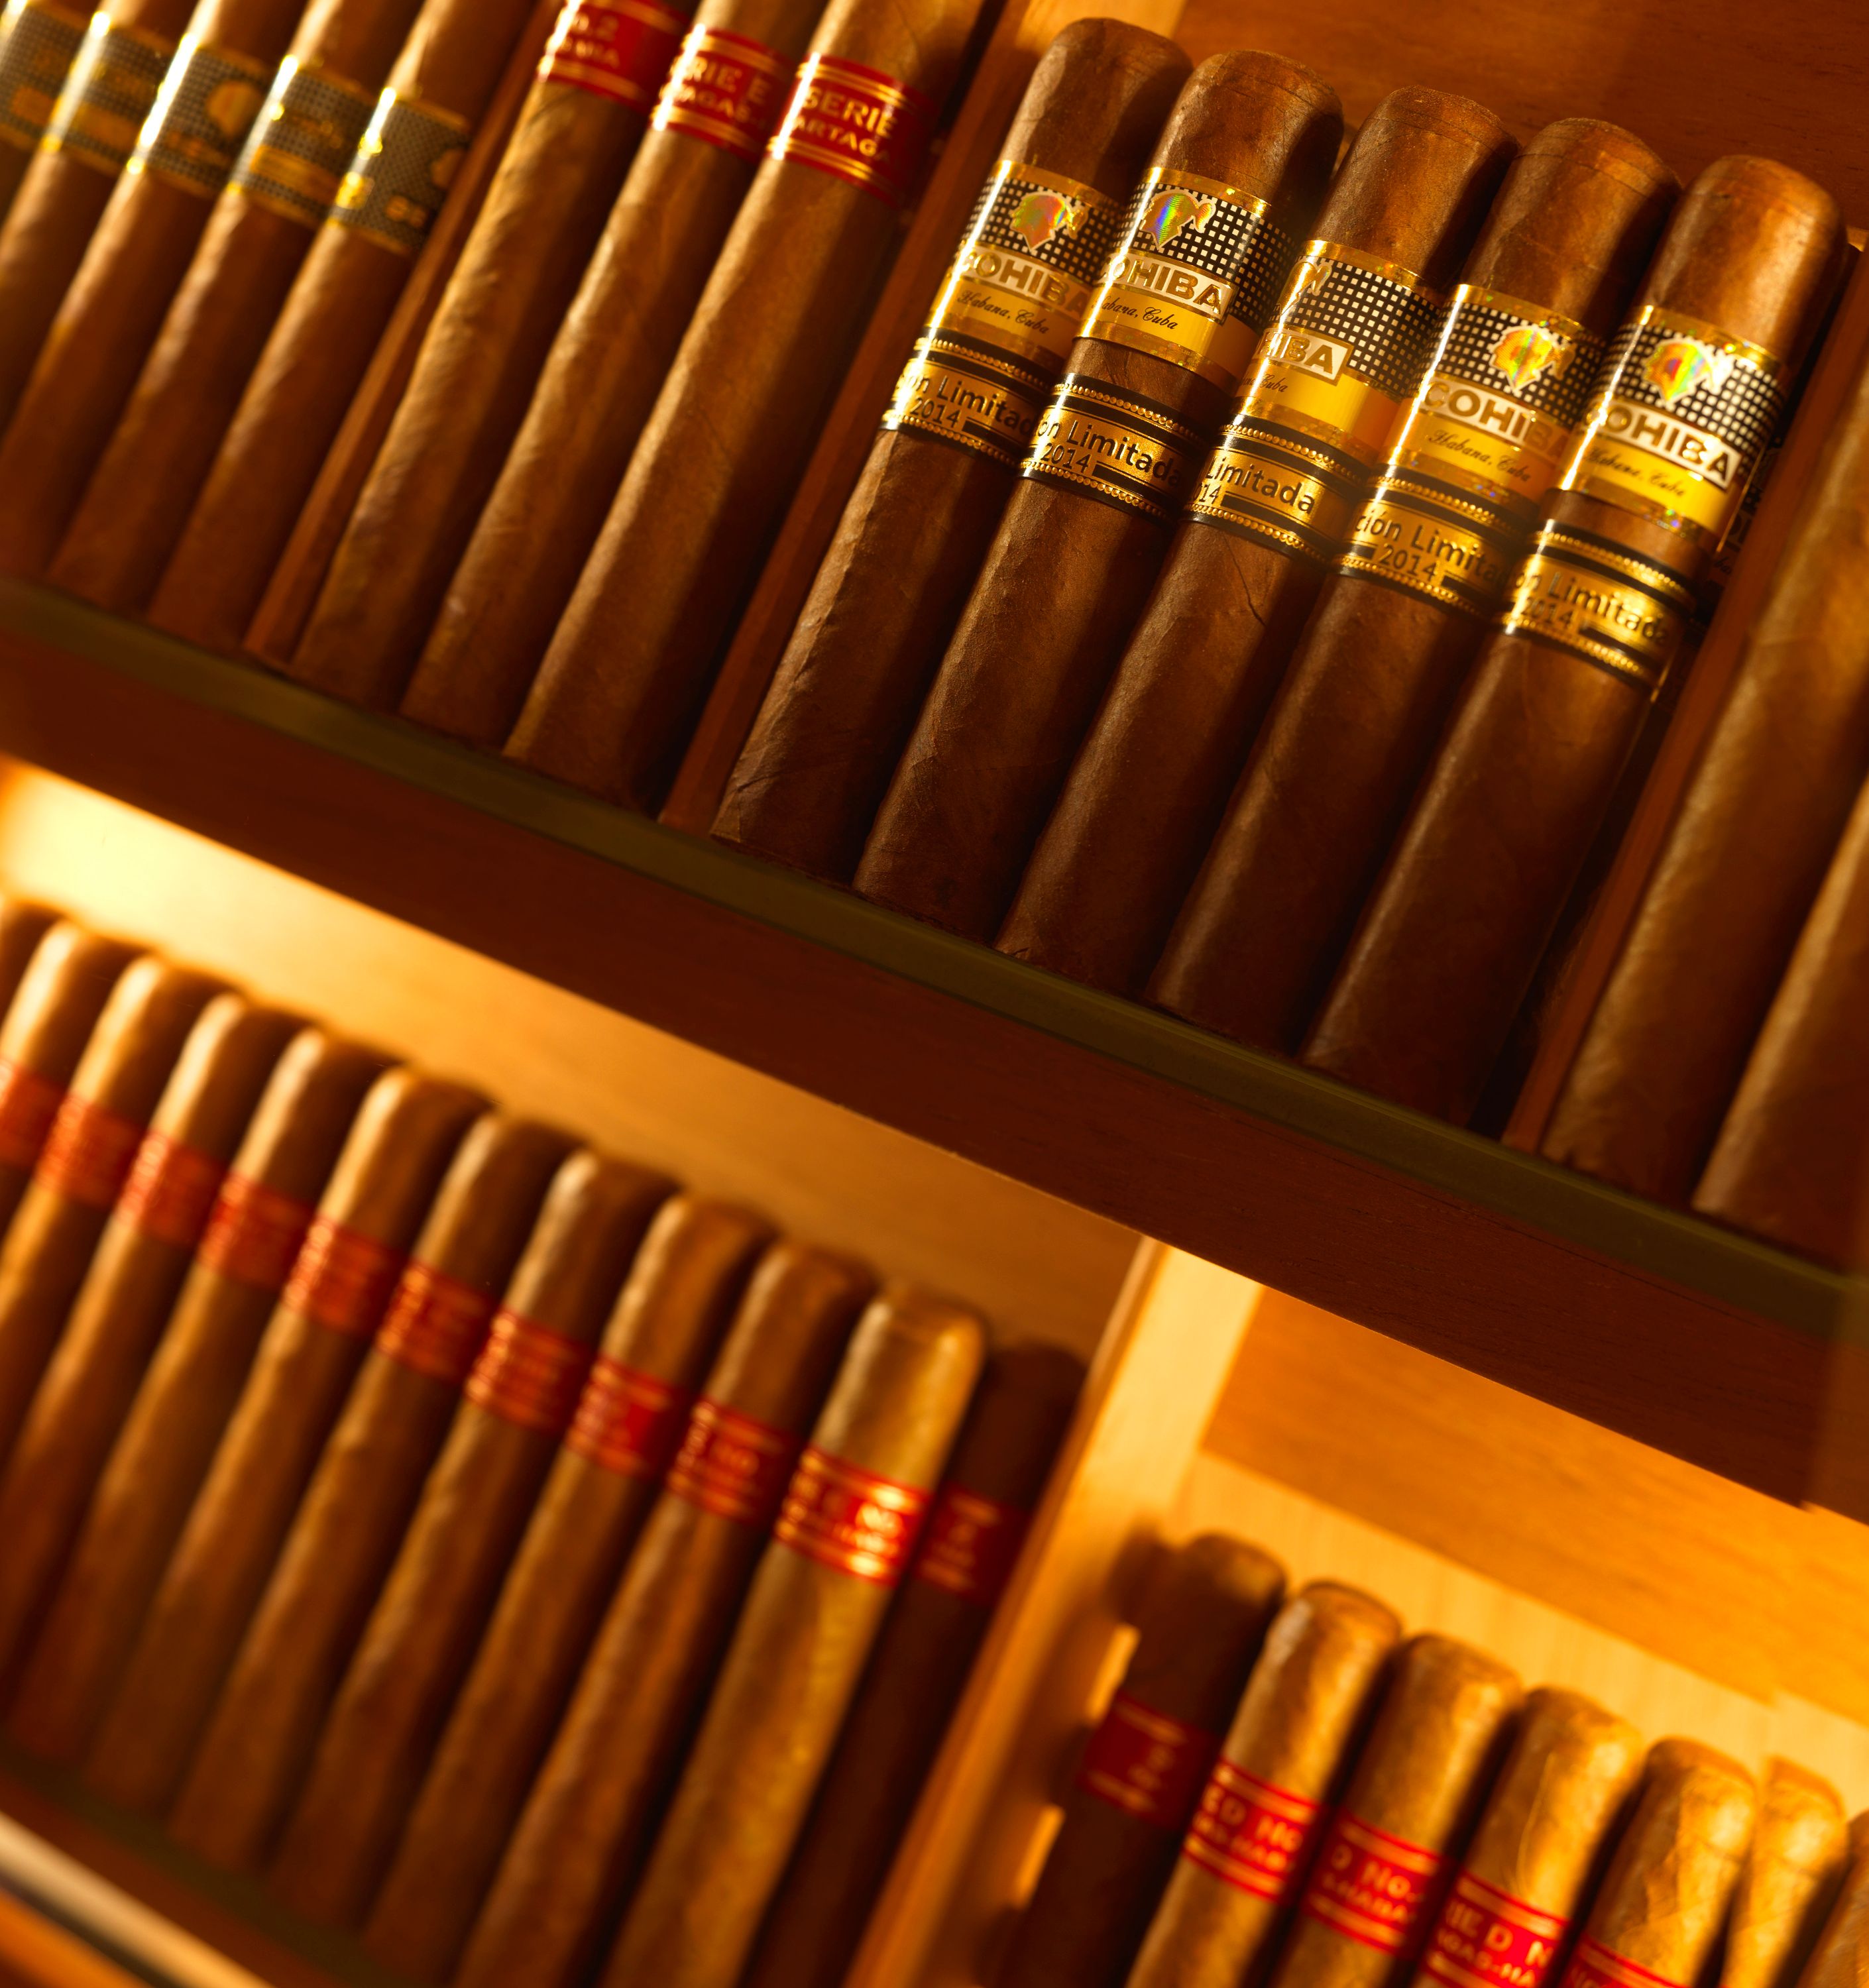 The Wellesley cigar detail